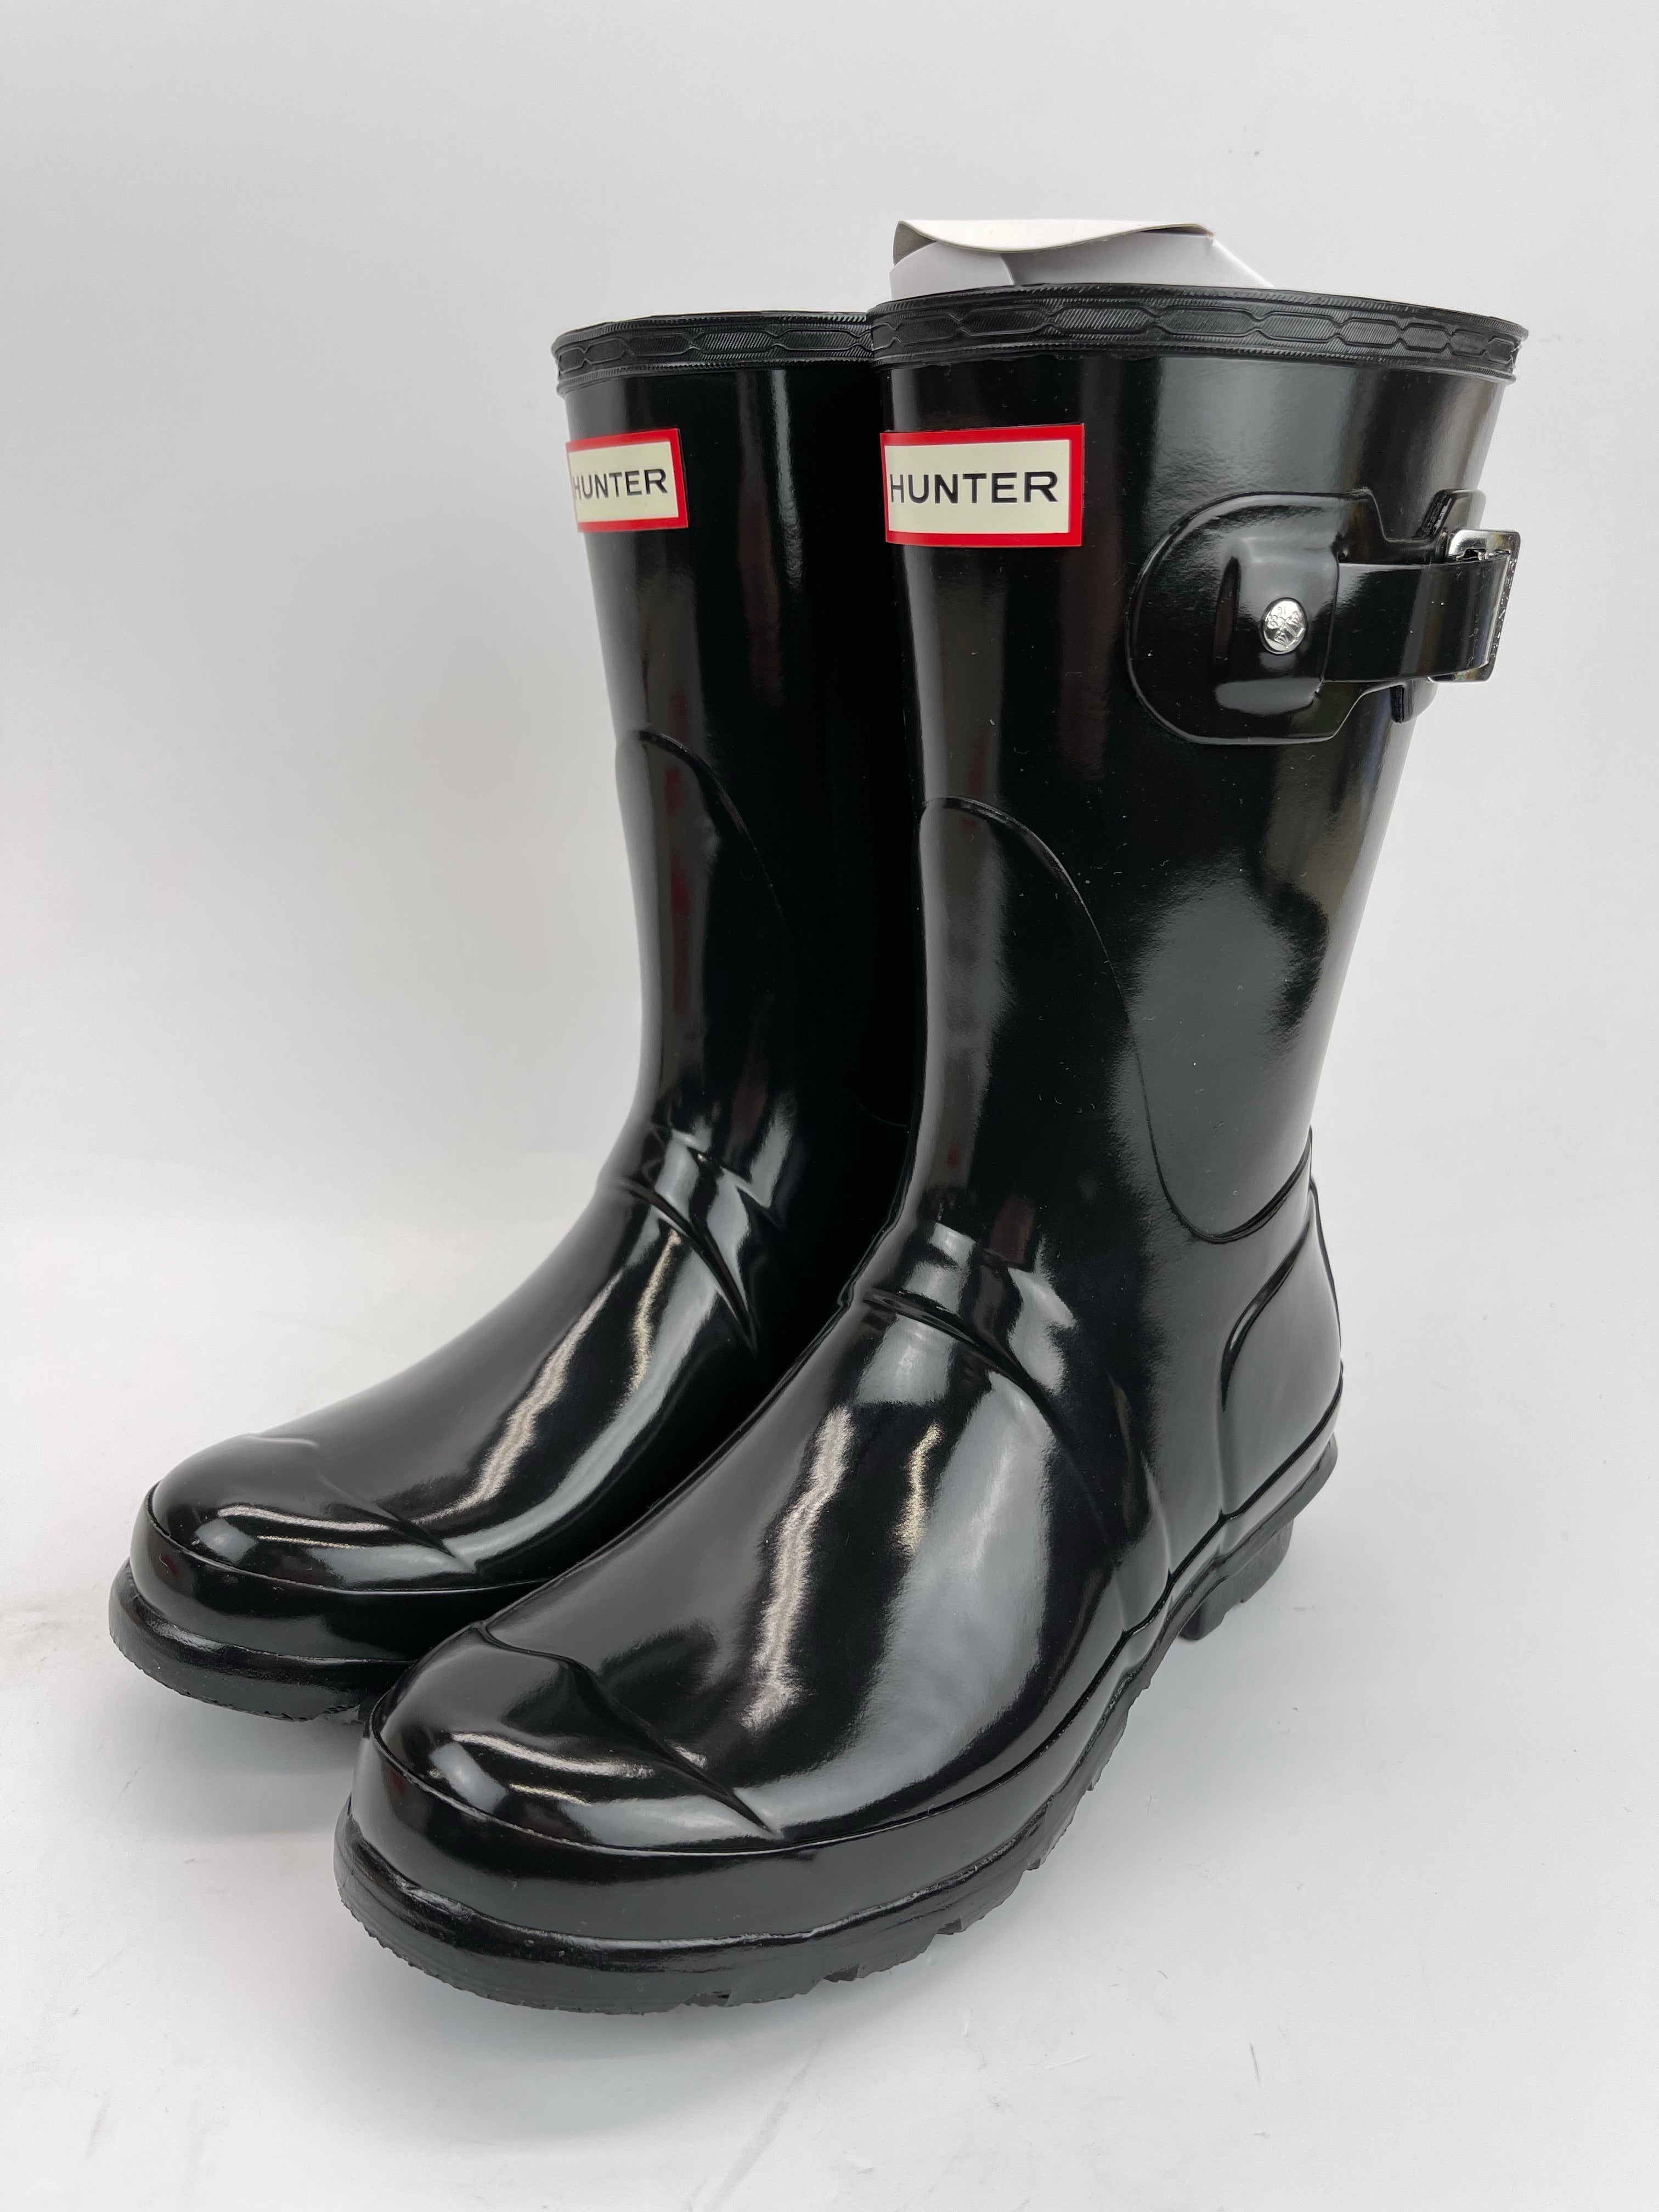 HUNTER Women's Original Short Gloss Rain Boots - Black (US 7)